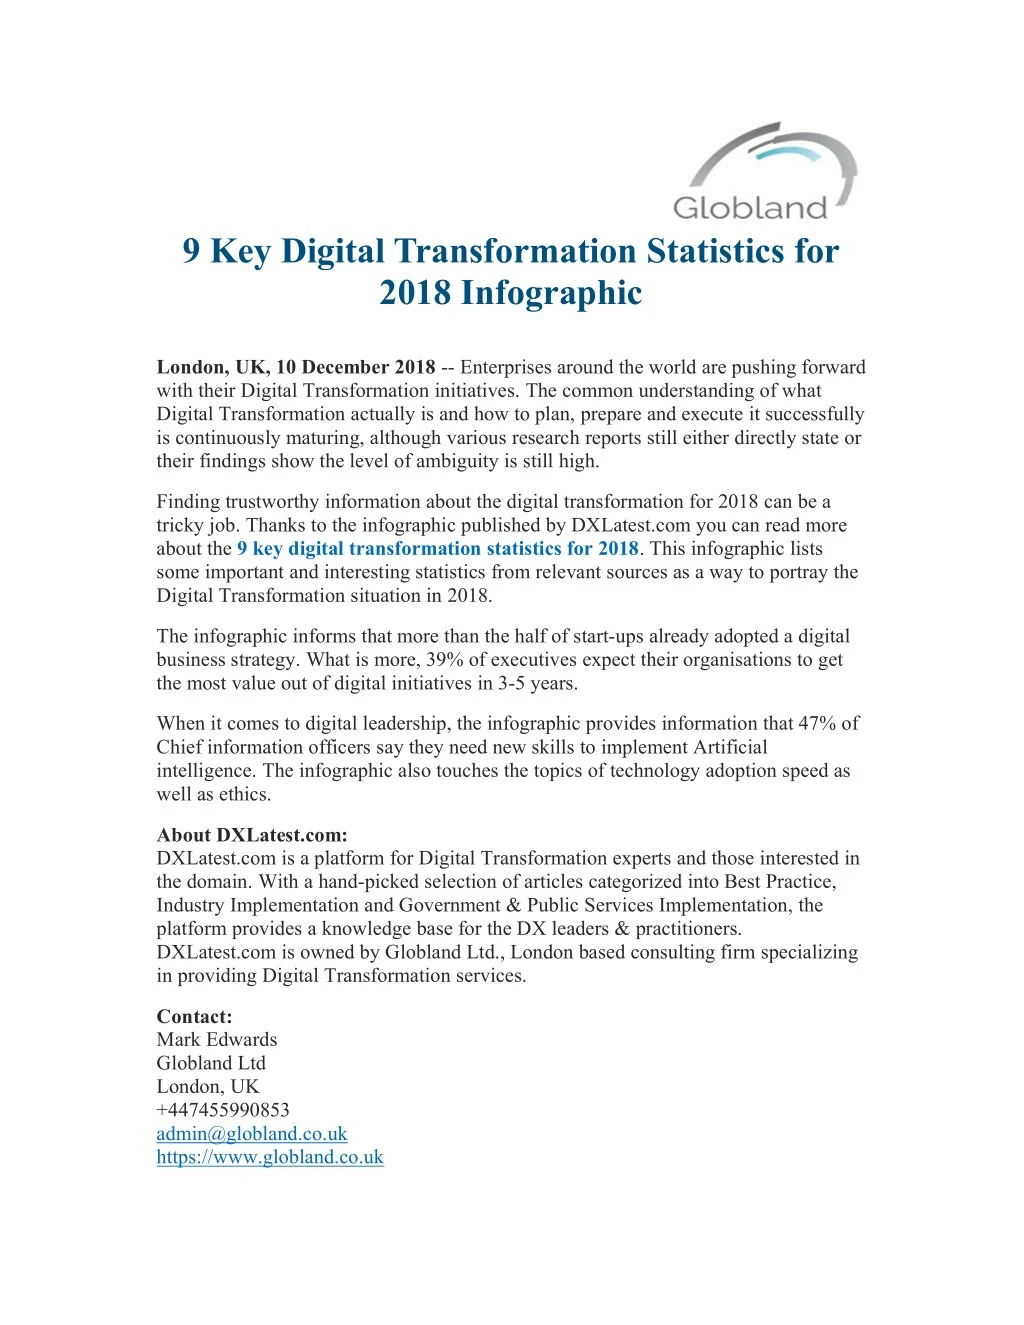 9 key digital transformation statistics for 2018